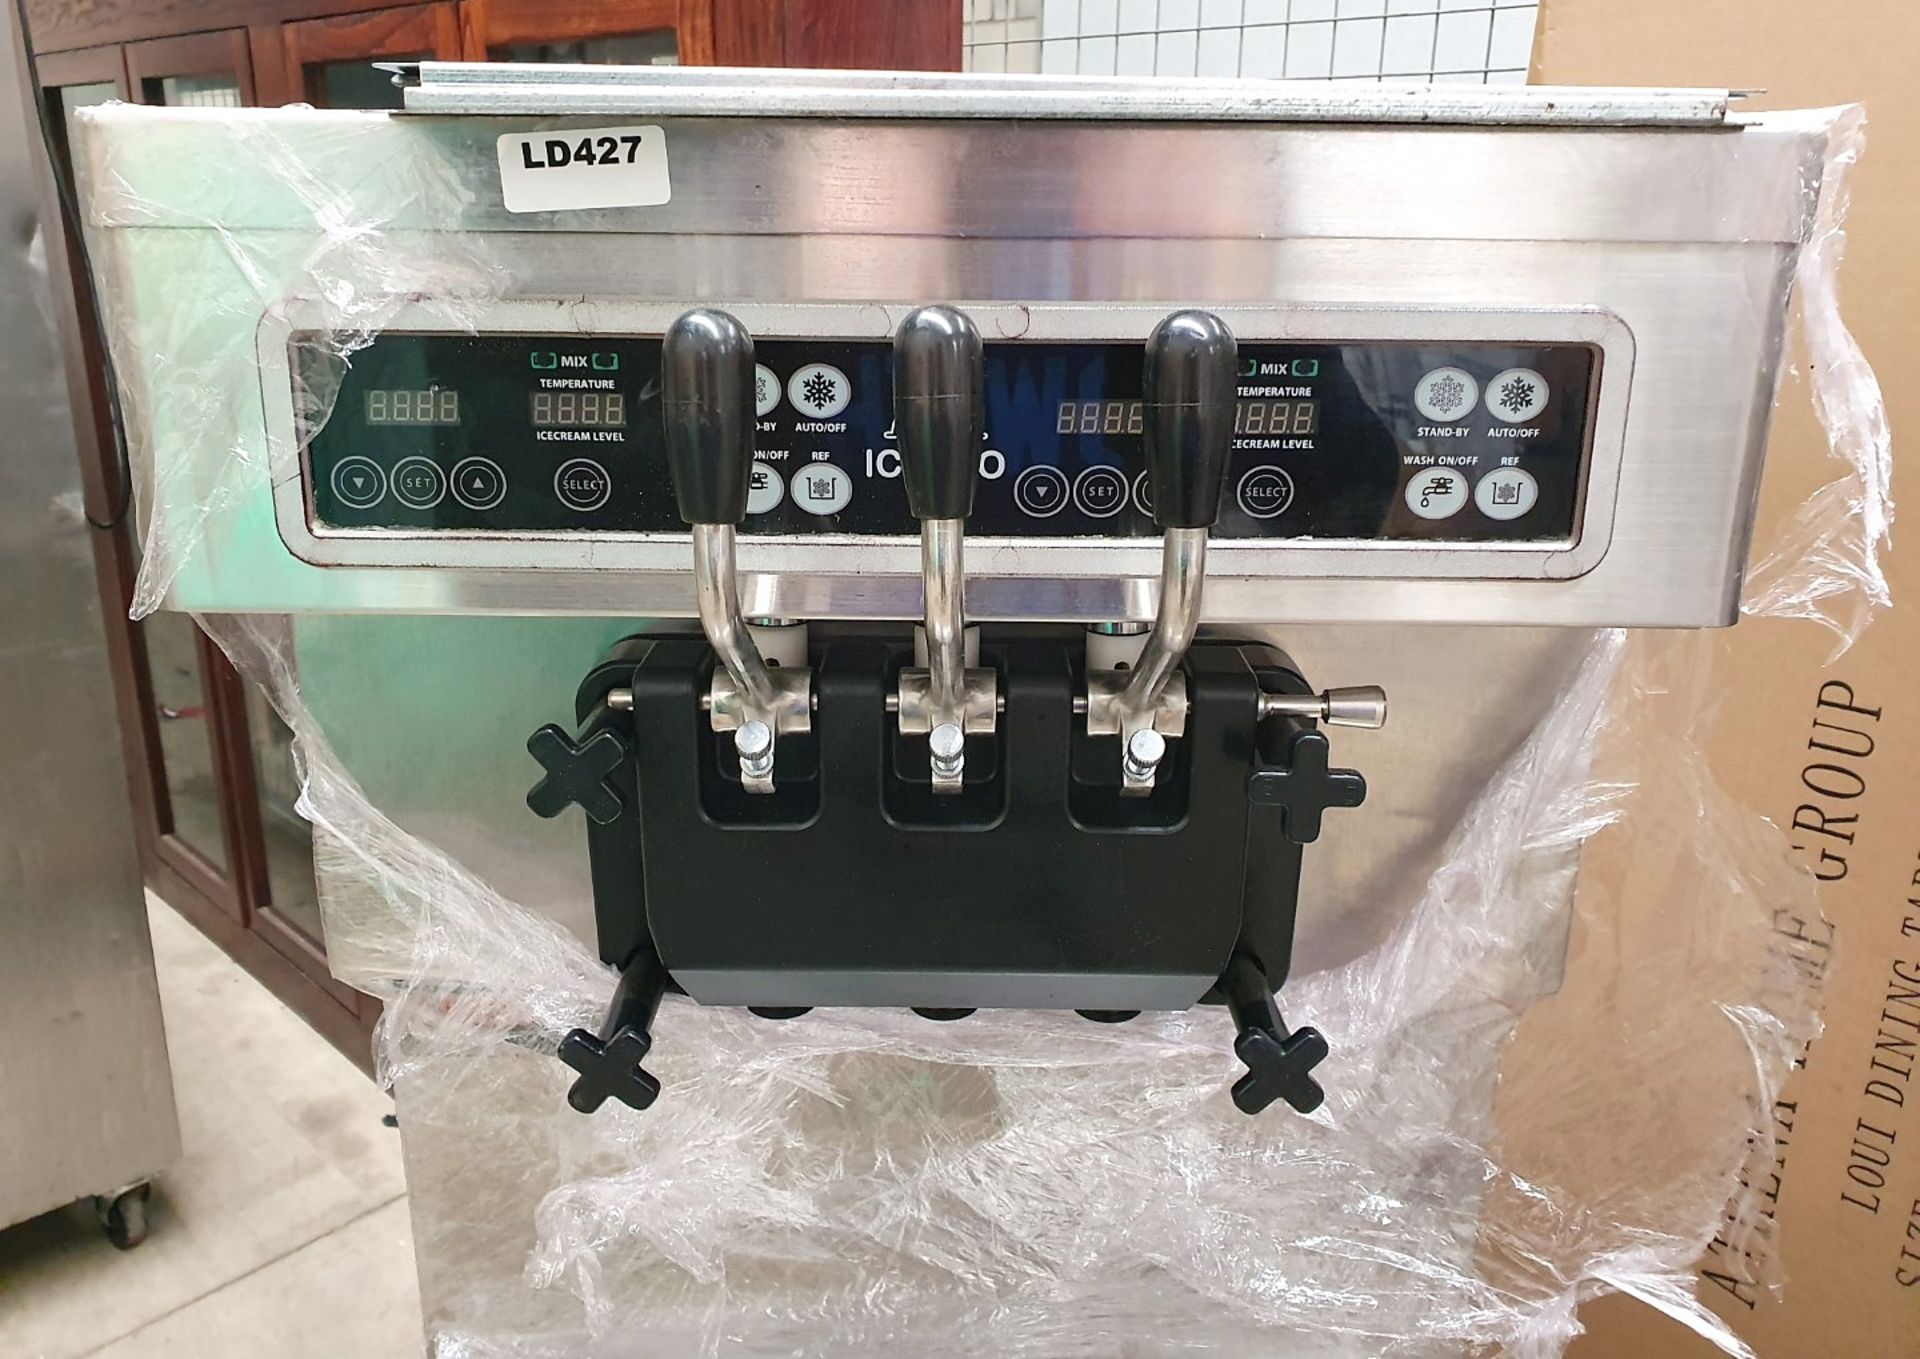 1 x ICETRO Ice Cream Machine - Ref: LD426 - CL350 - Location: Altrincham WA14 - Image 9 of 12